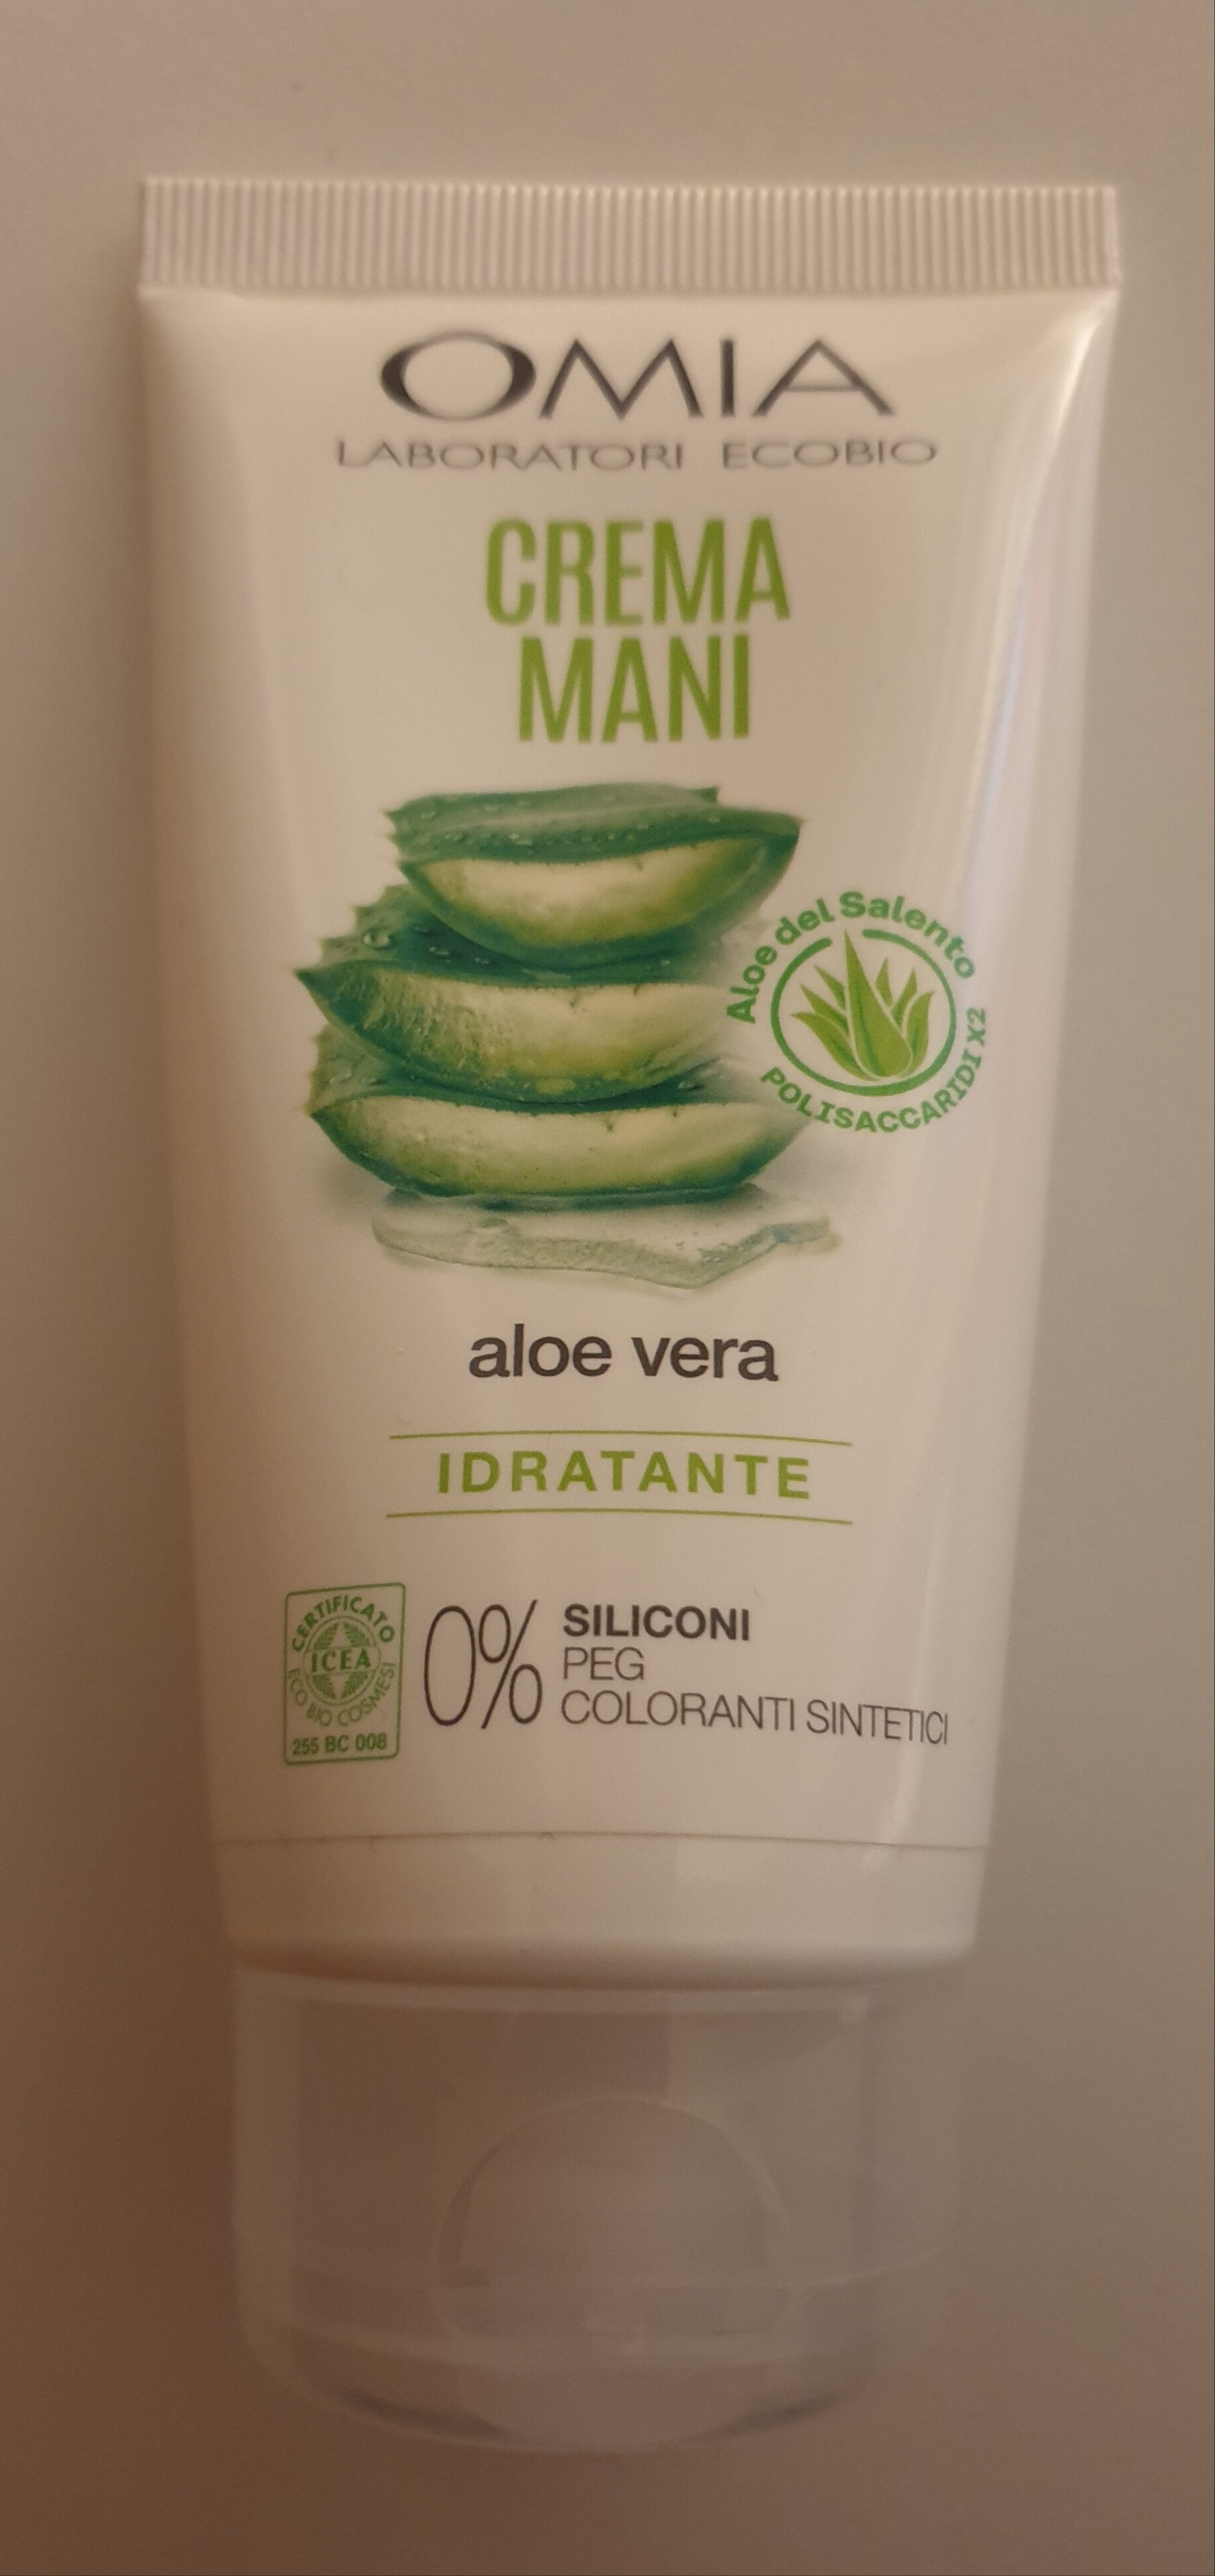 Crema mani aloe vera - 製品 - it